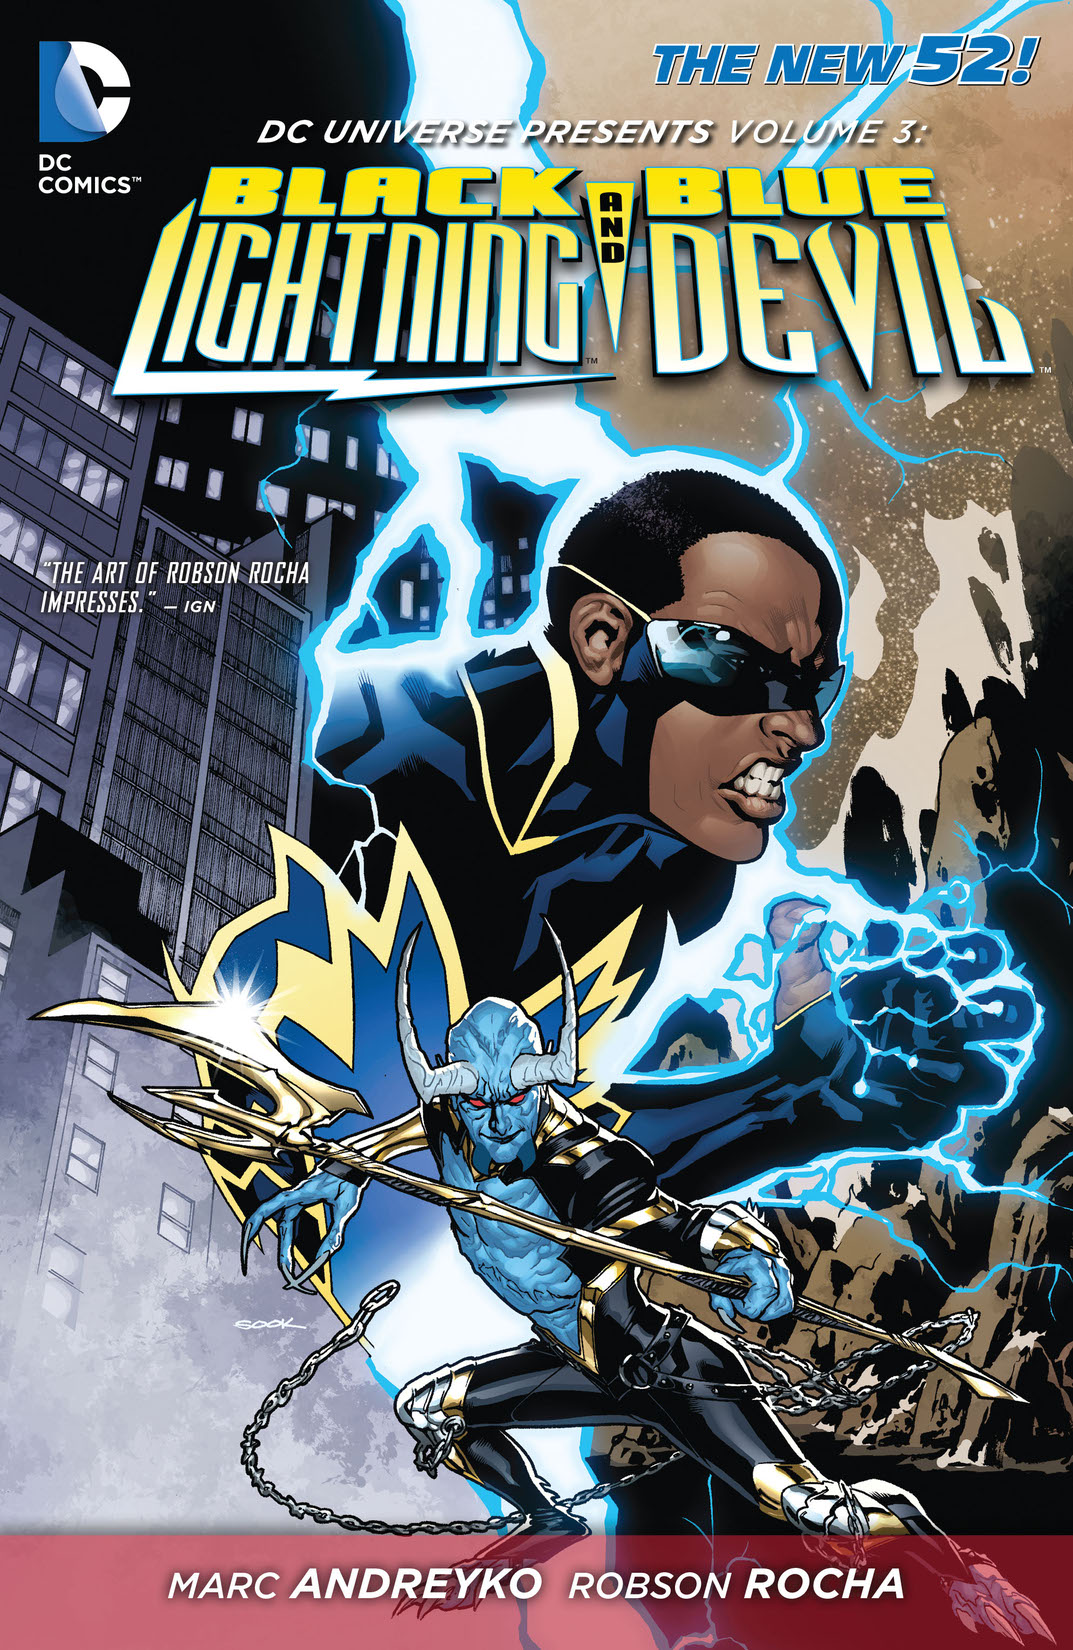 DC Universe Presents Vol. 3: Black Lightning and Blue Devil preview images